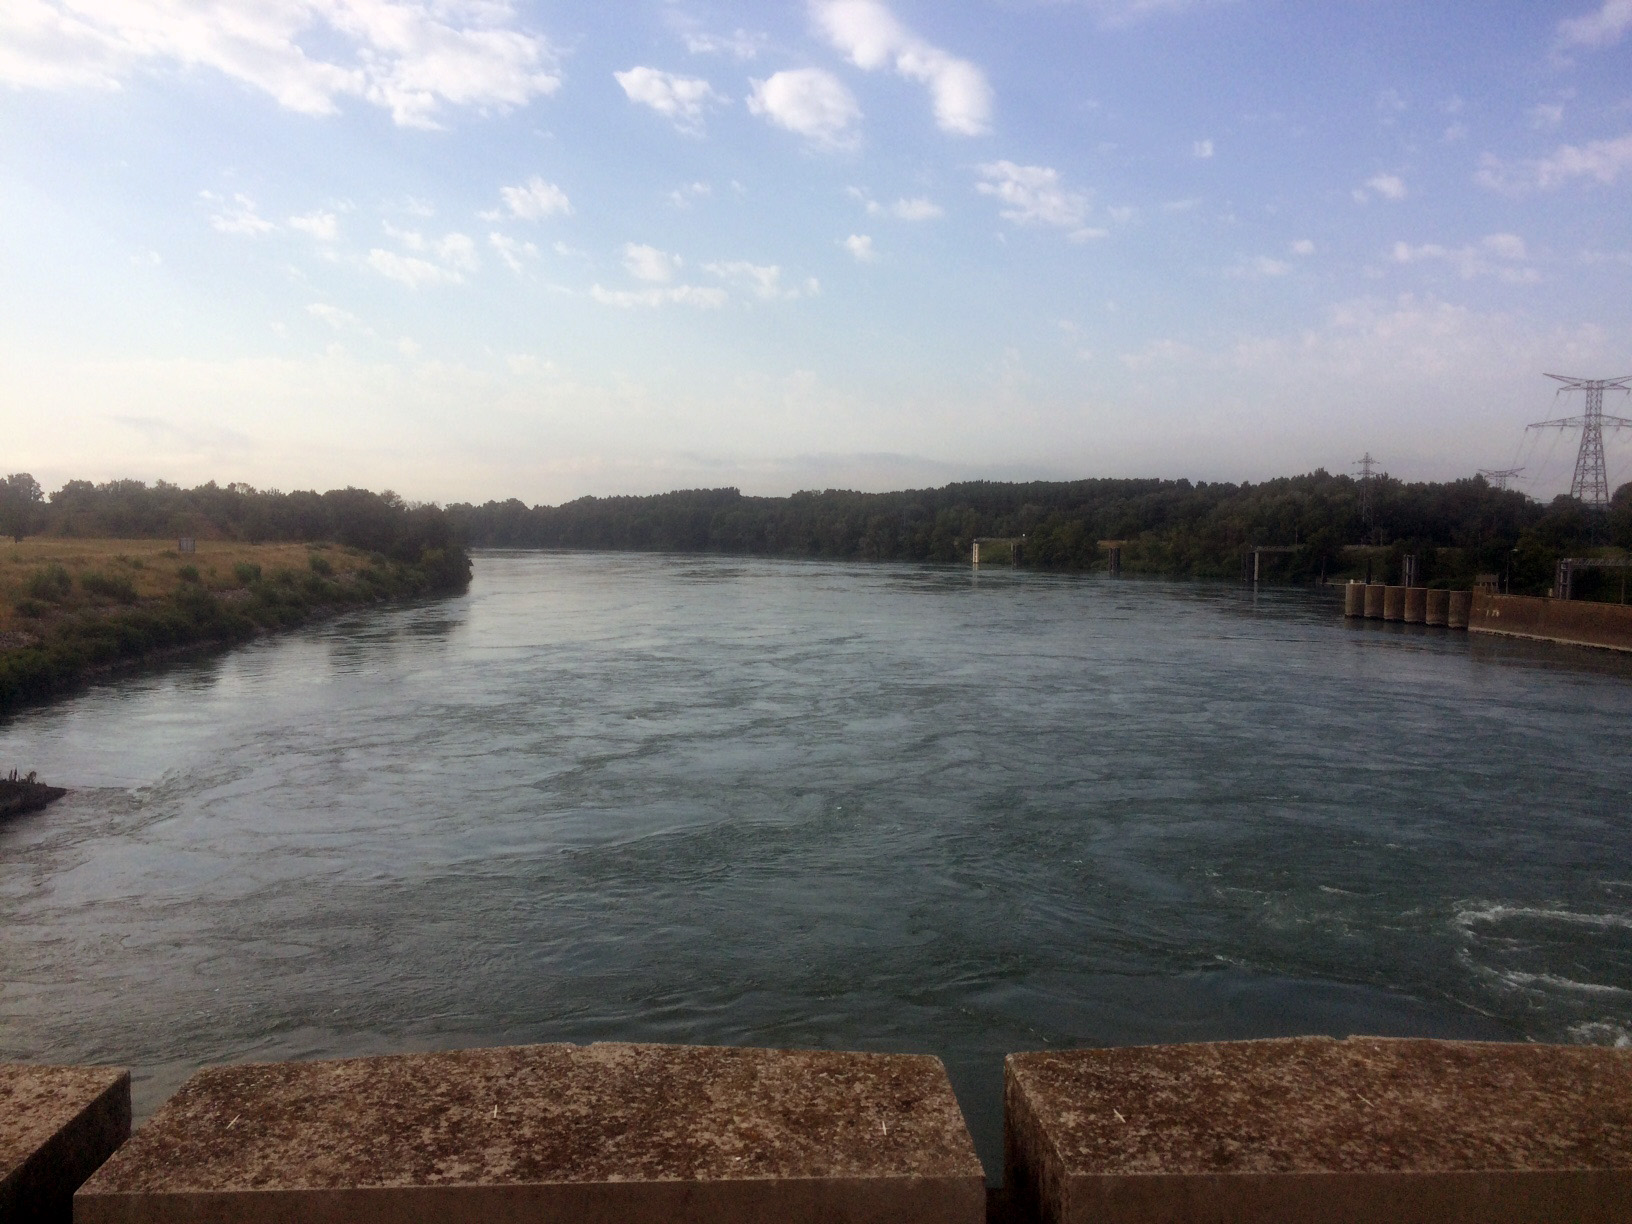 The Rhone River